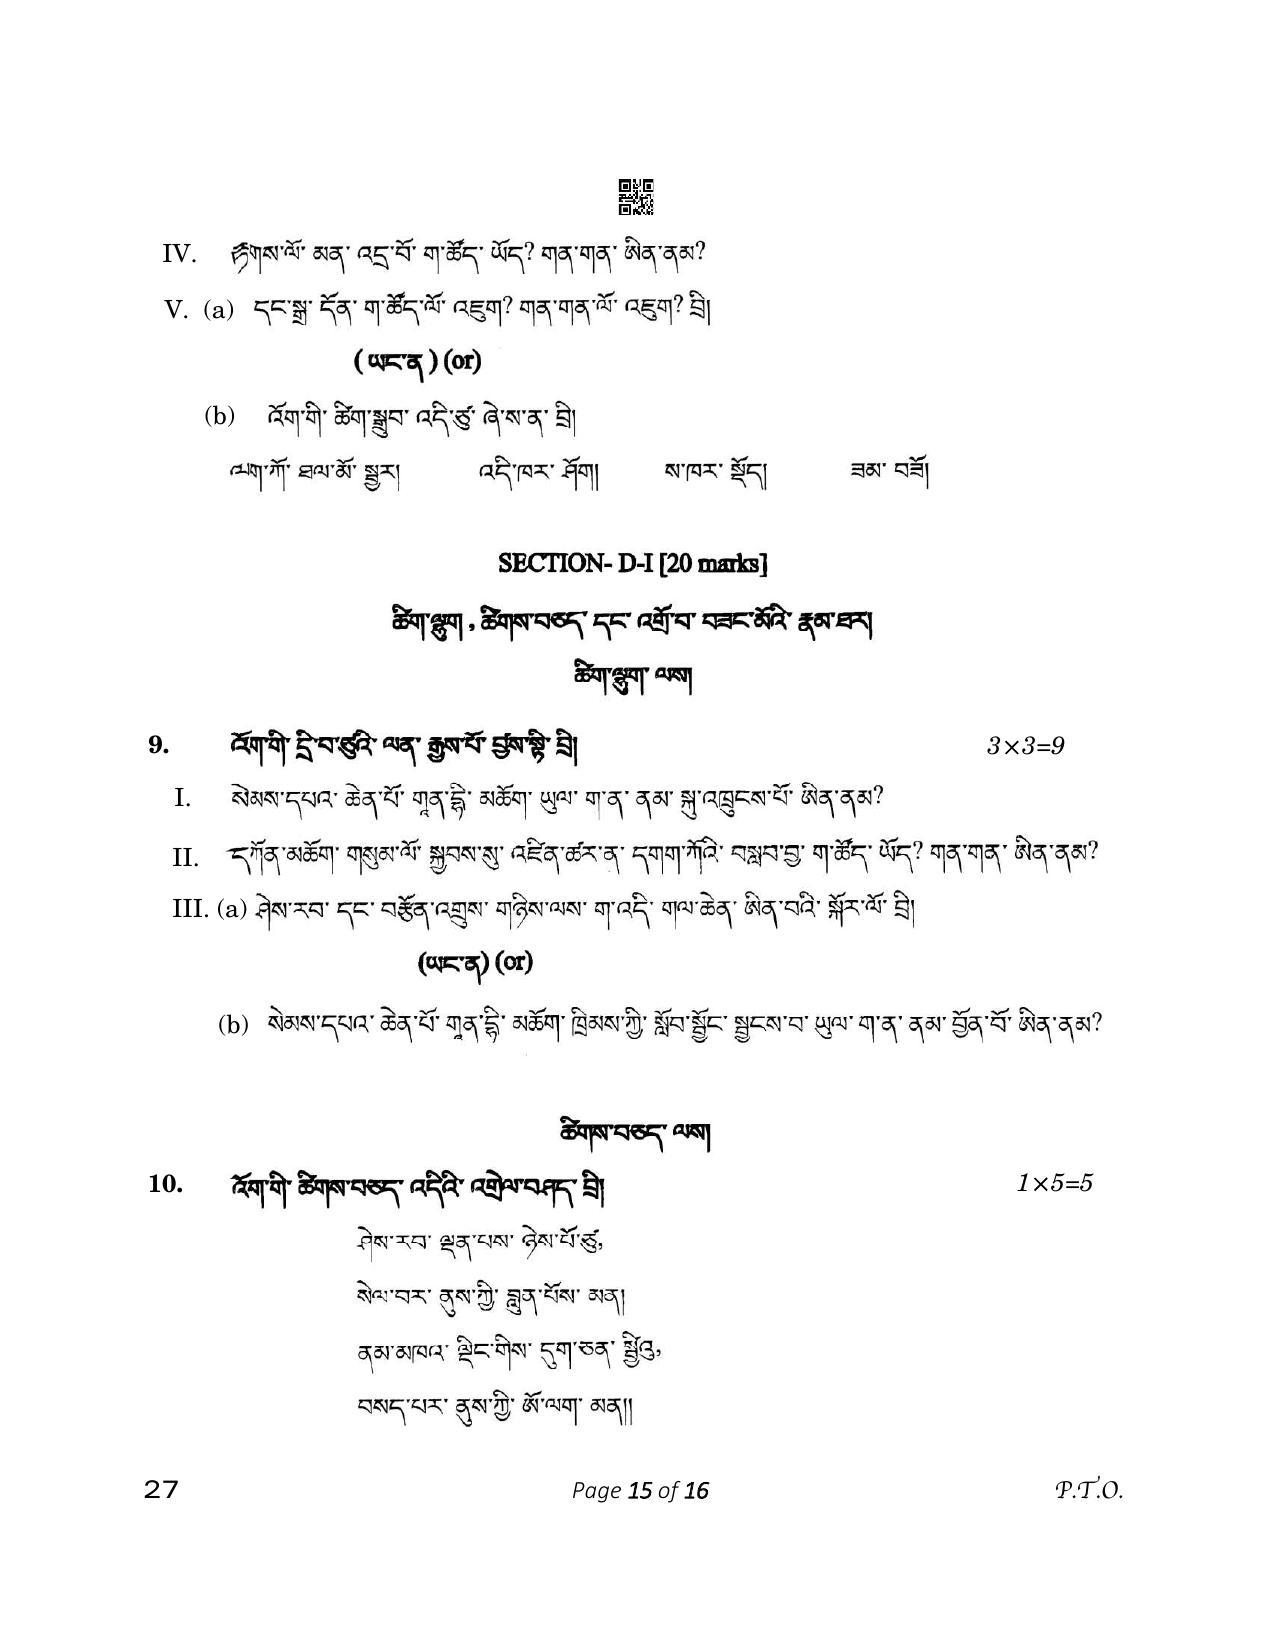 CBSE Class 12 27_Bhutia 2023 2023 Question Paper - Page 15